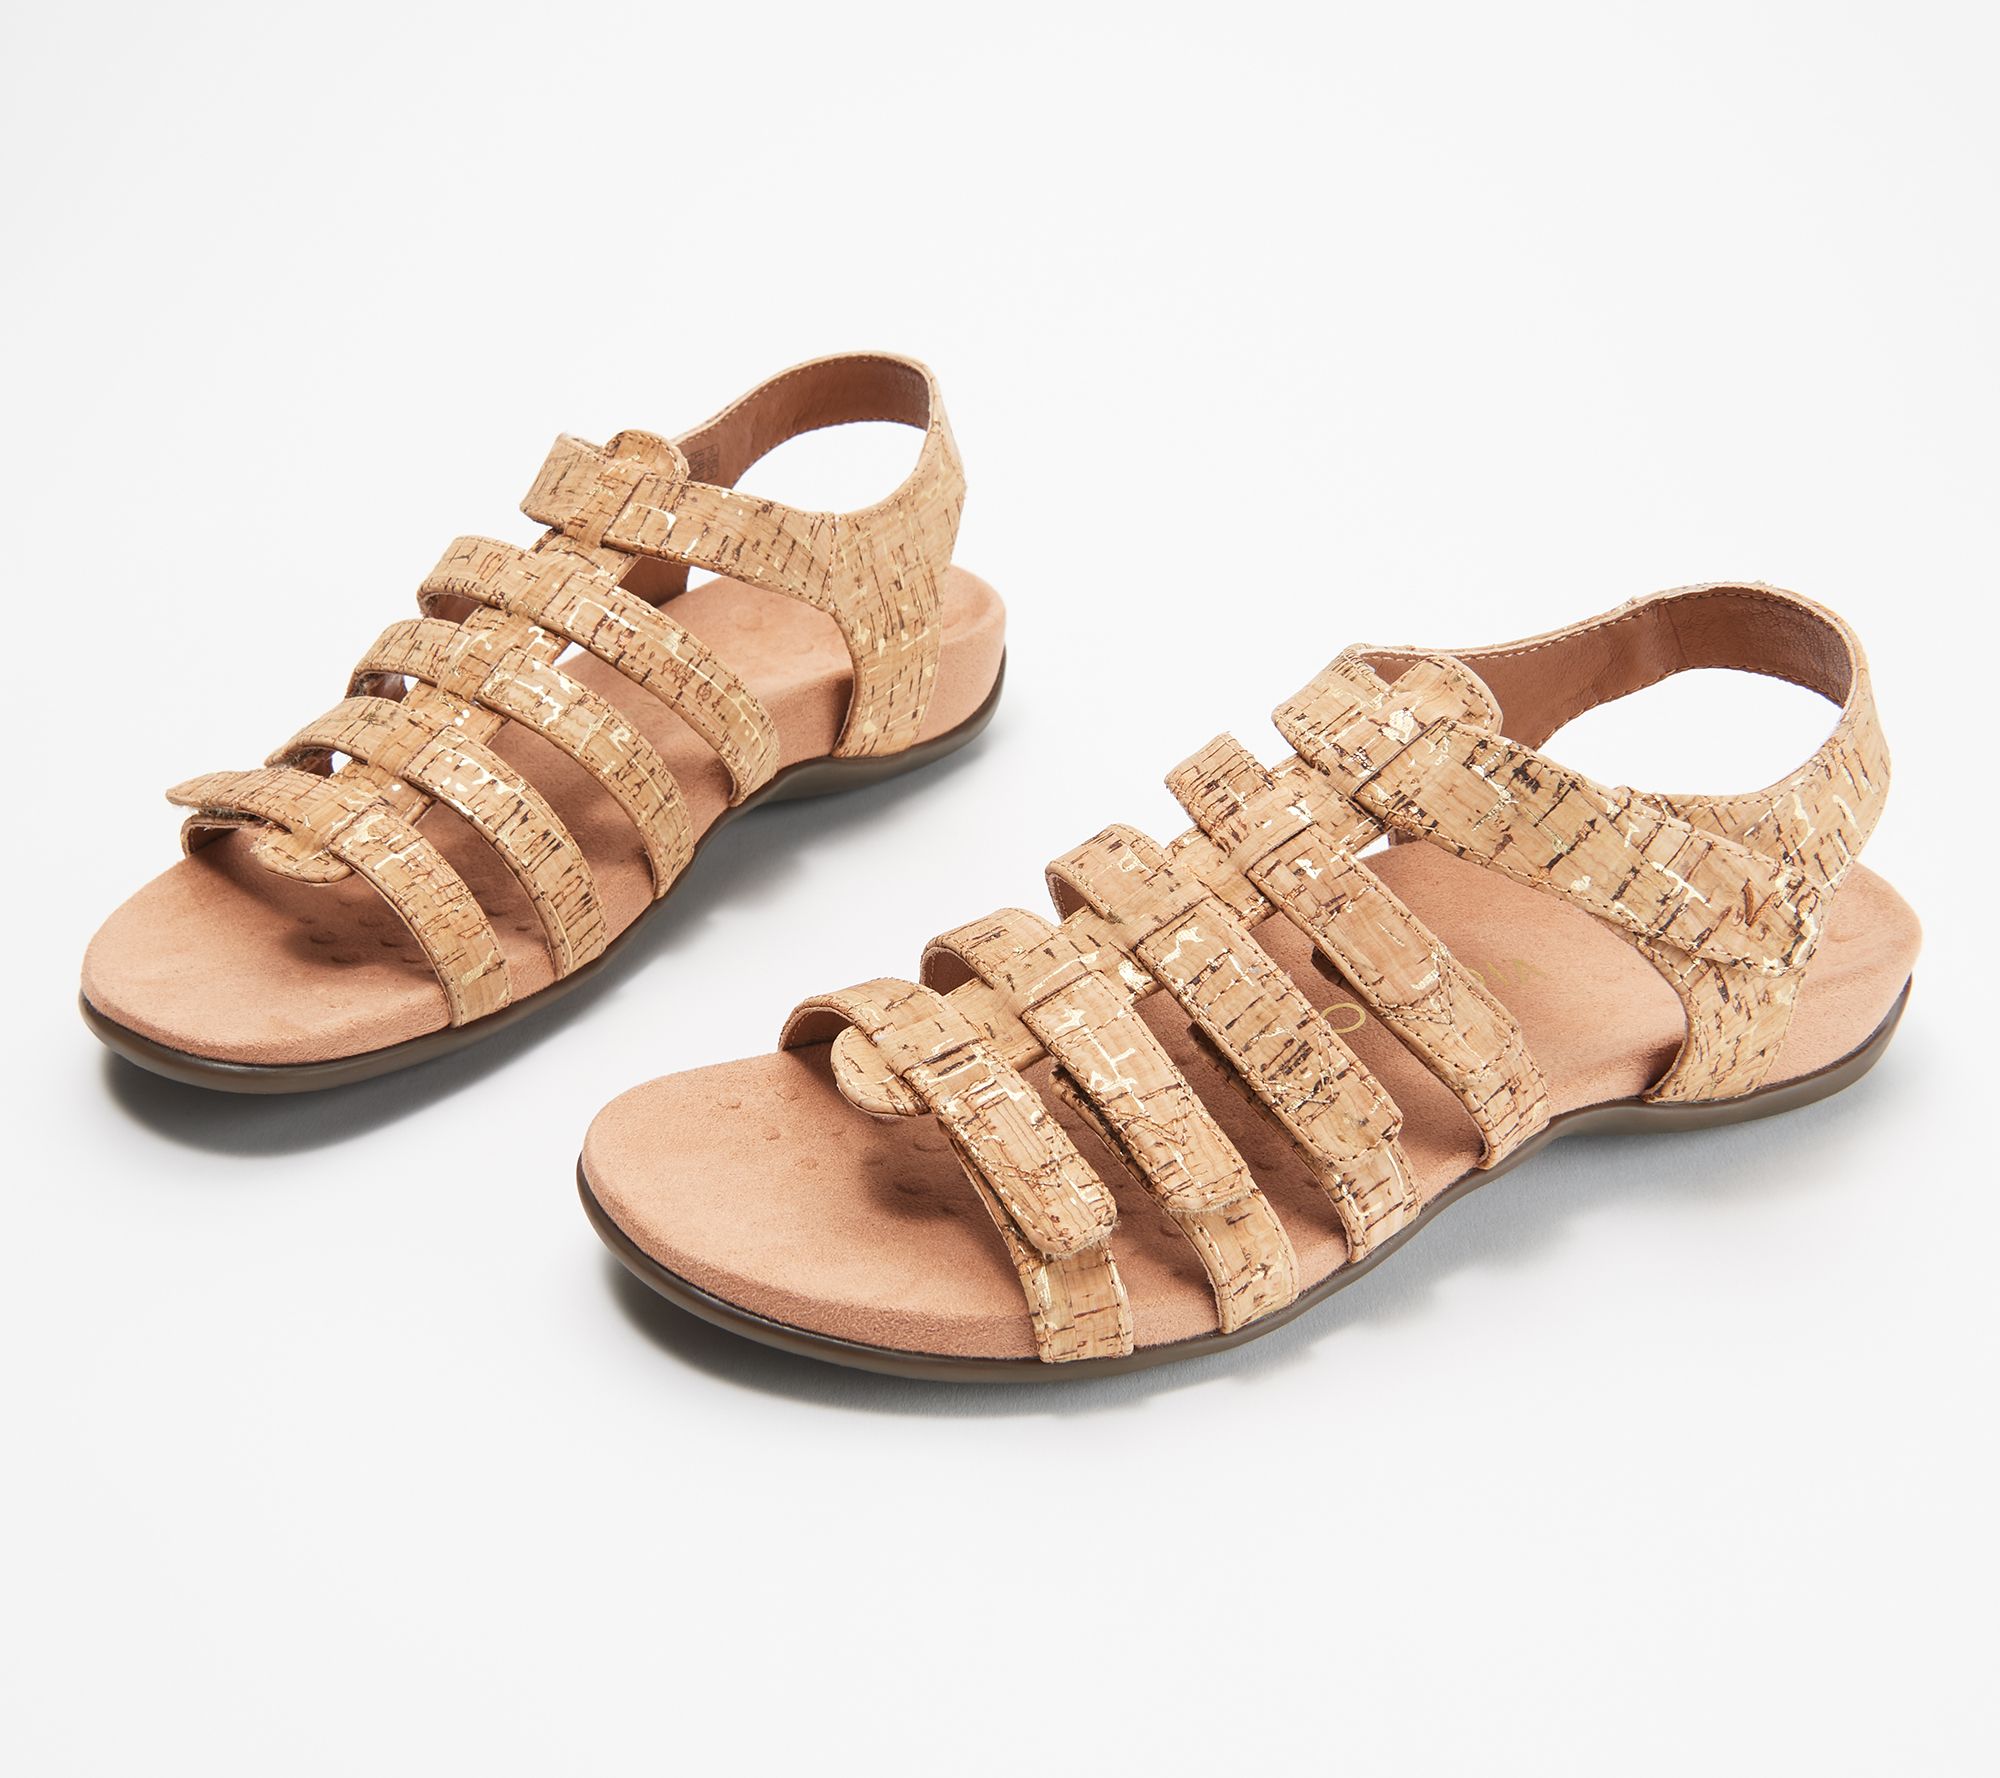 Vionic Leather Gladiator Sandals 